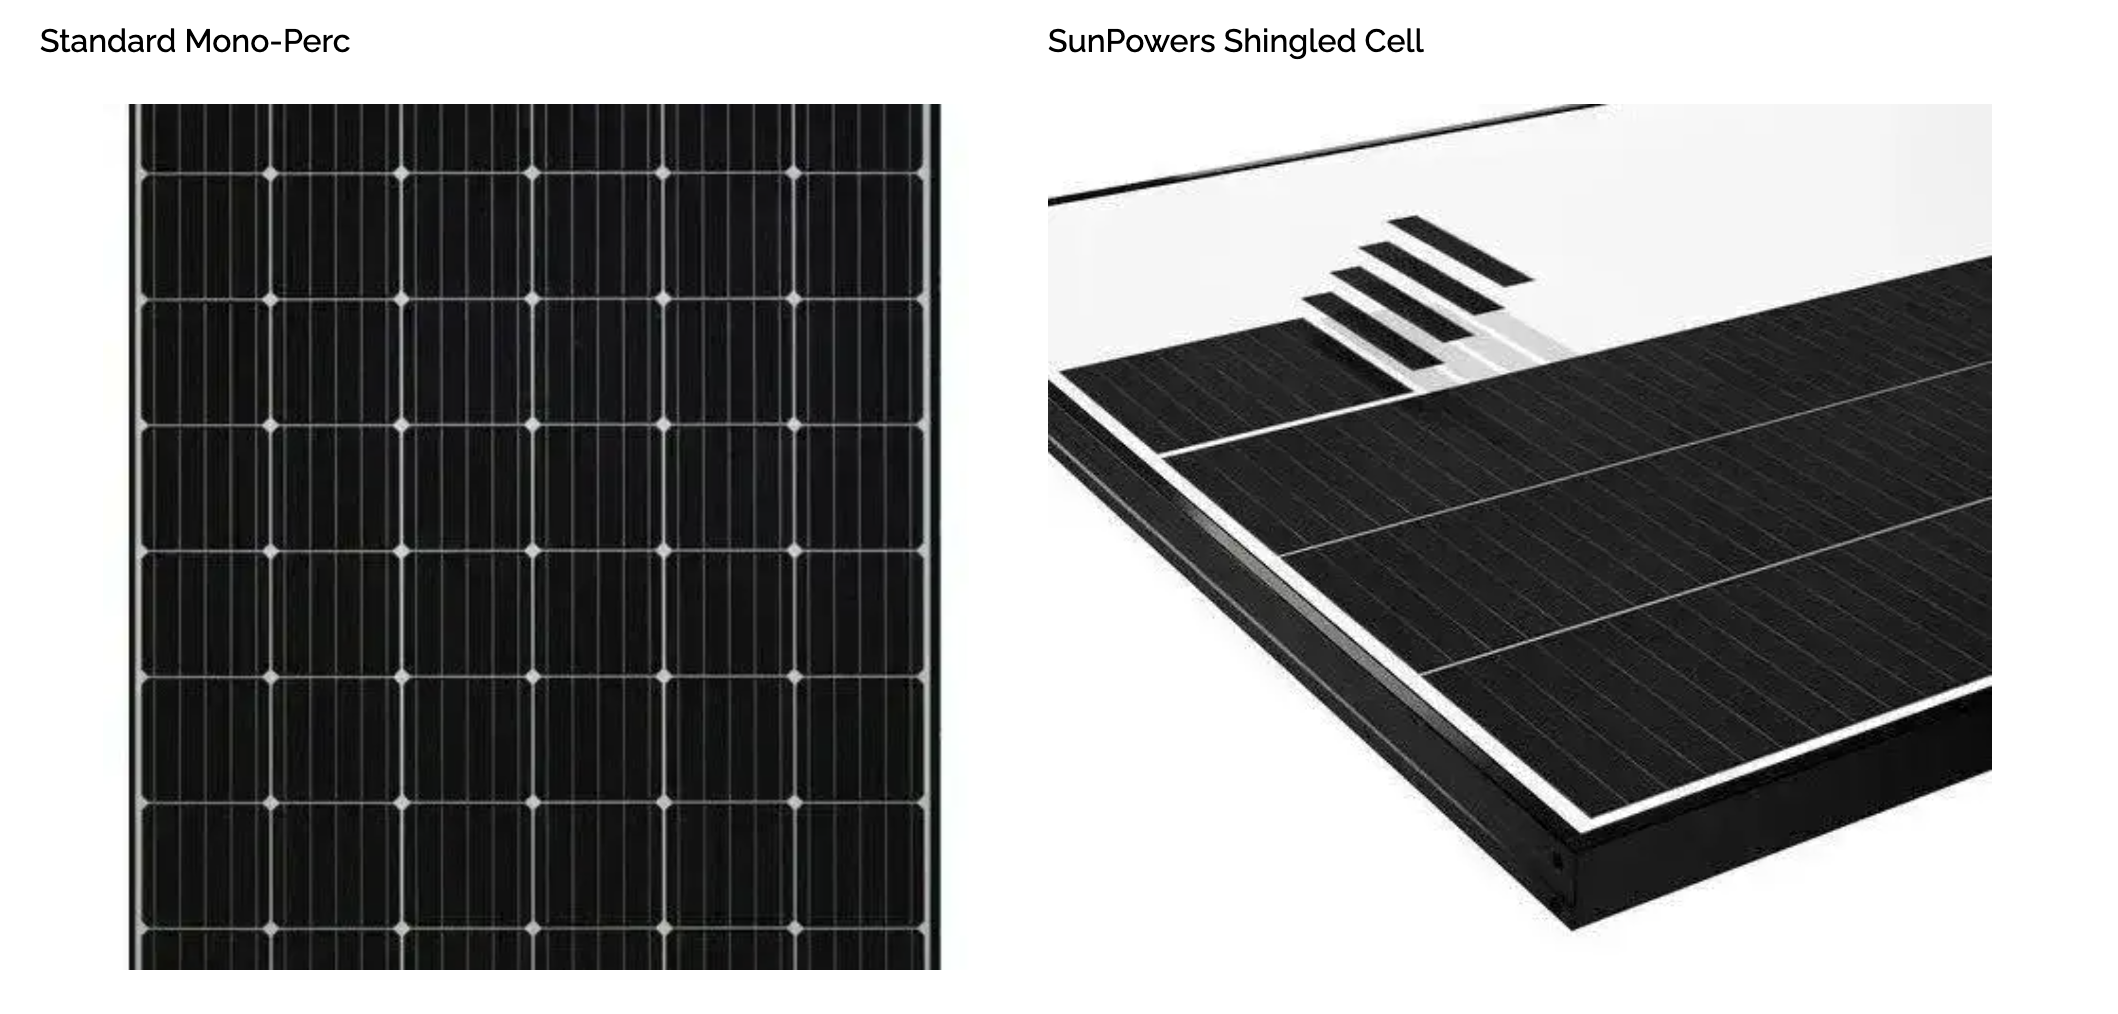 Standard Mono-Perc vs SunPowers Shingled Cell